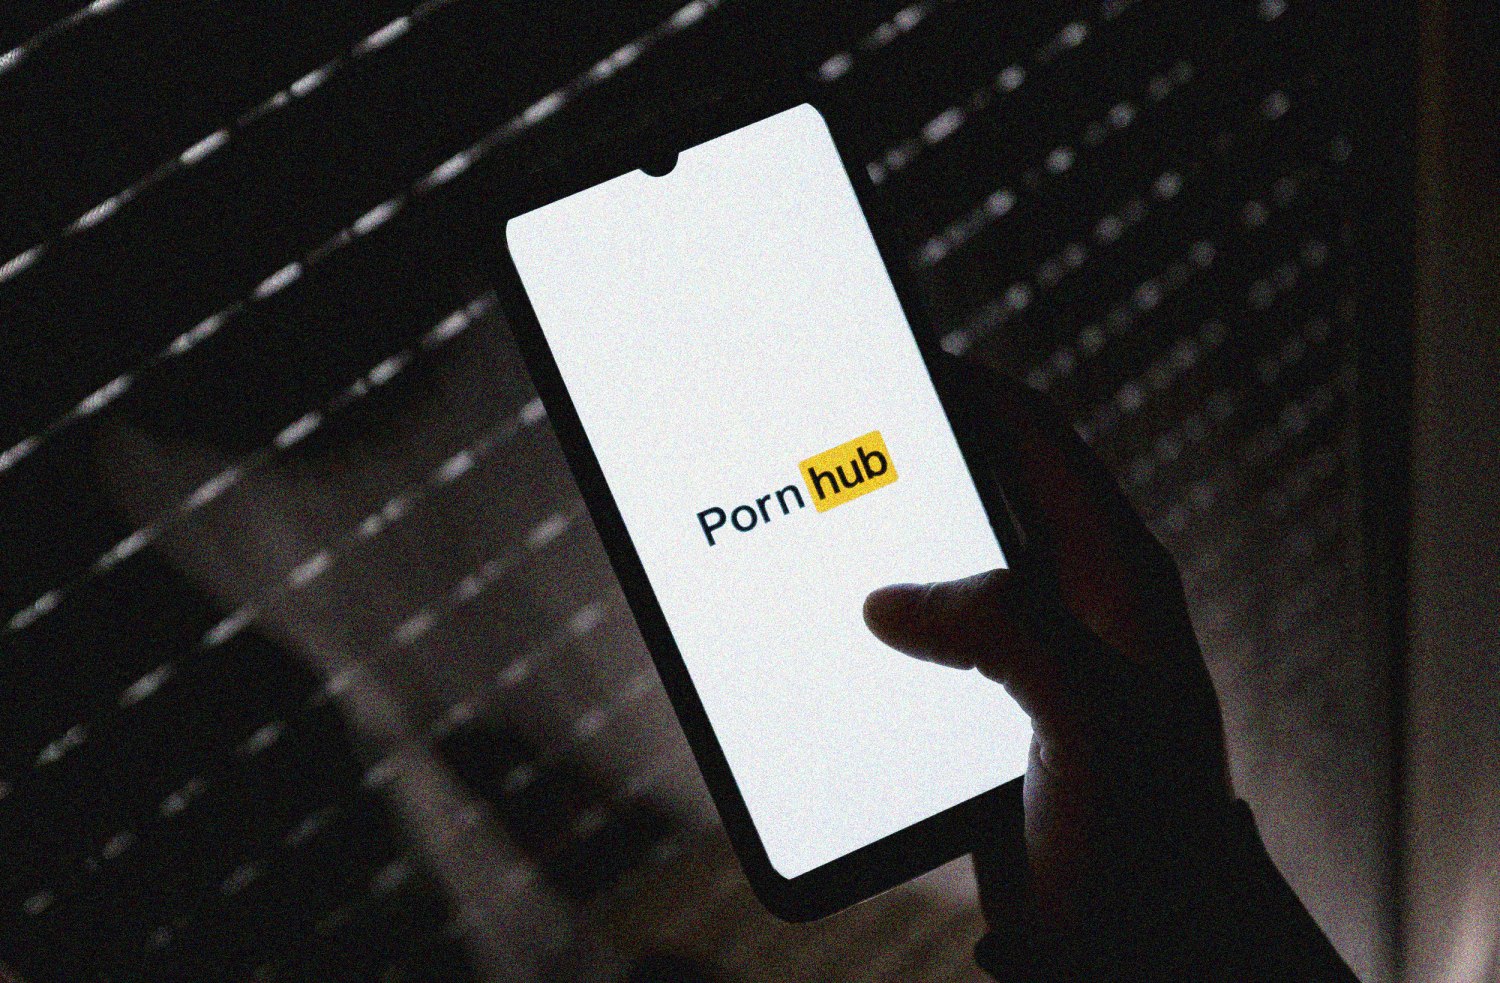 Porhub - Meet Pornhub's new owner: Ethical Capital Partners